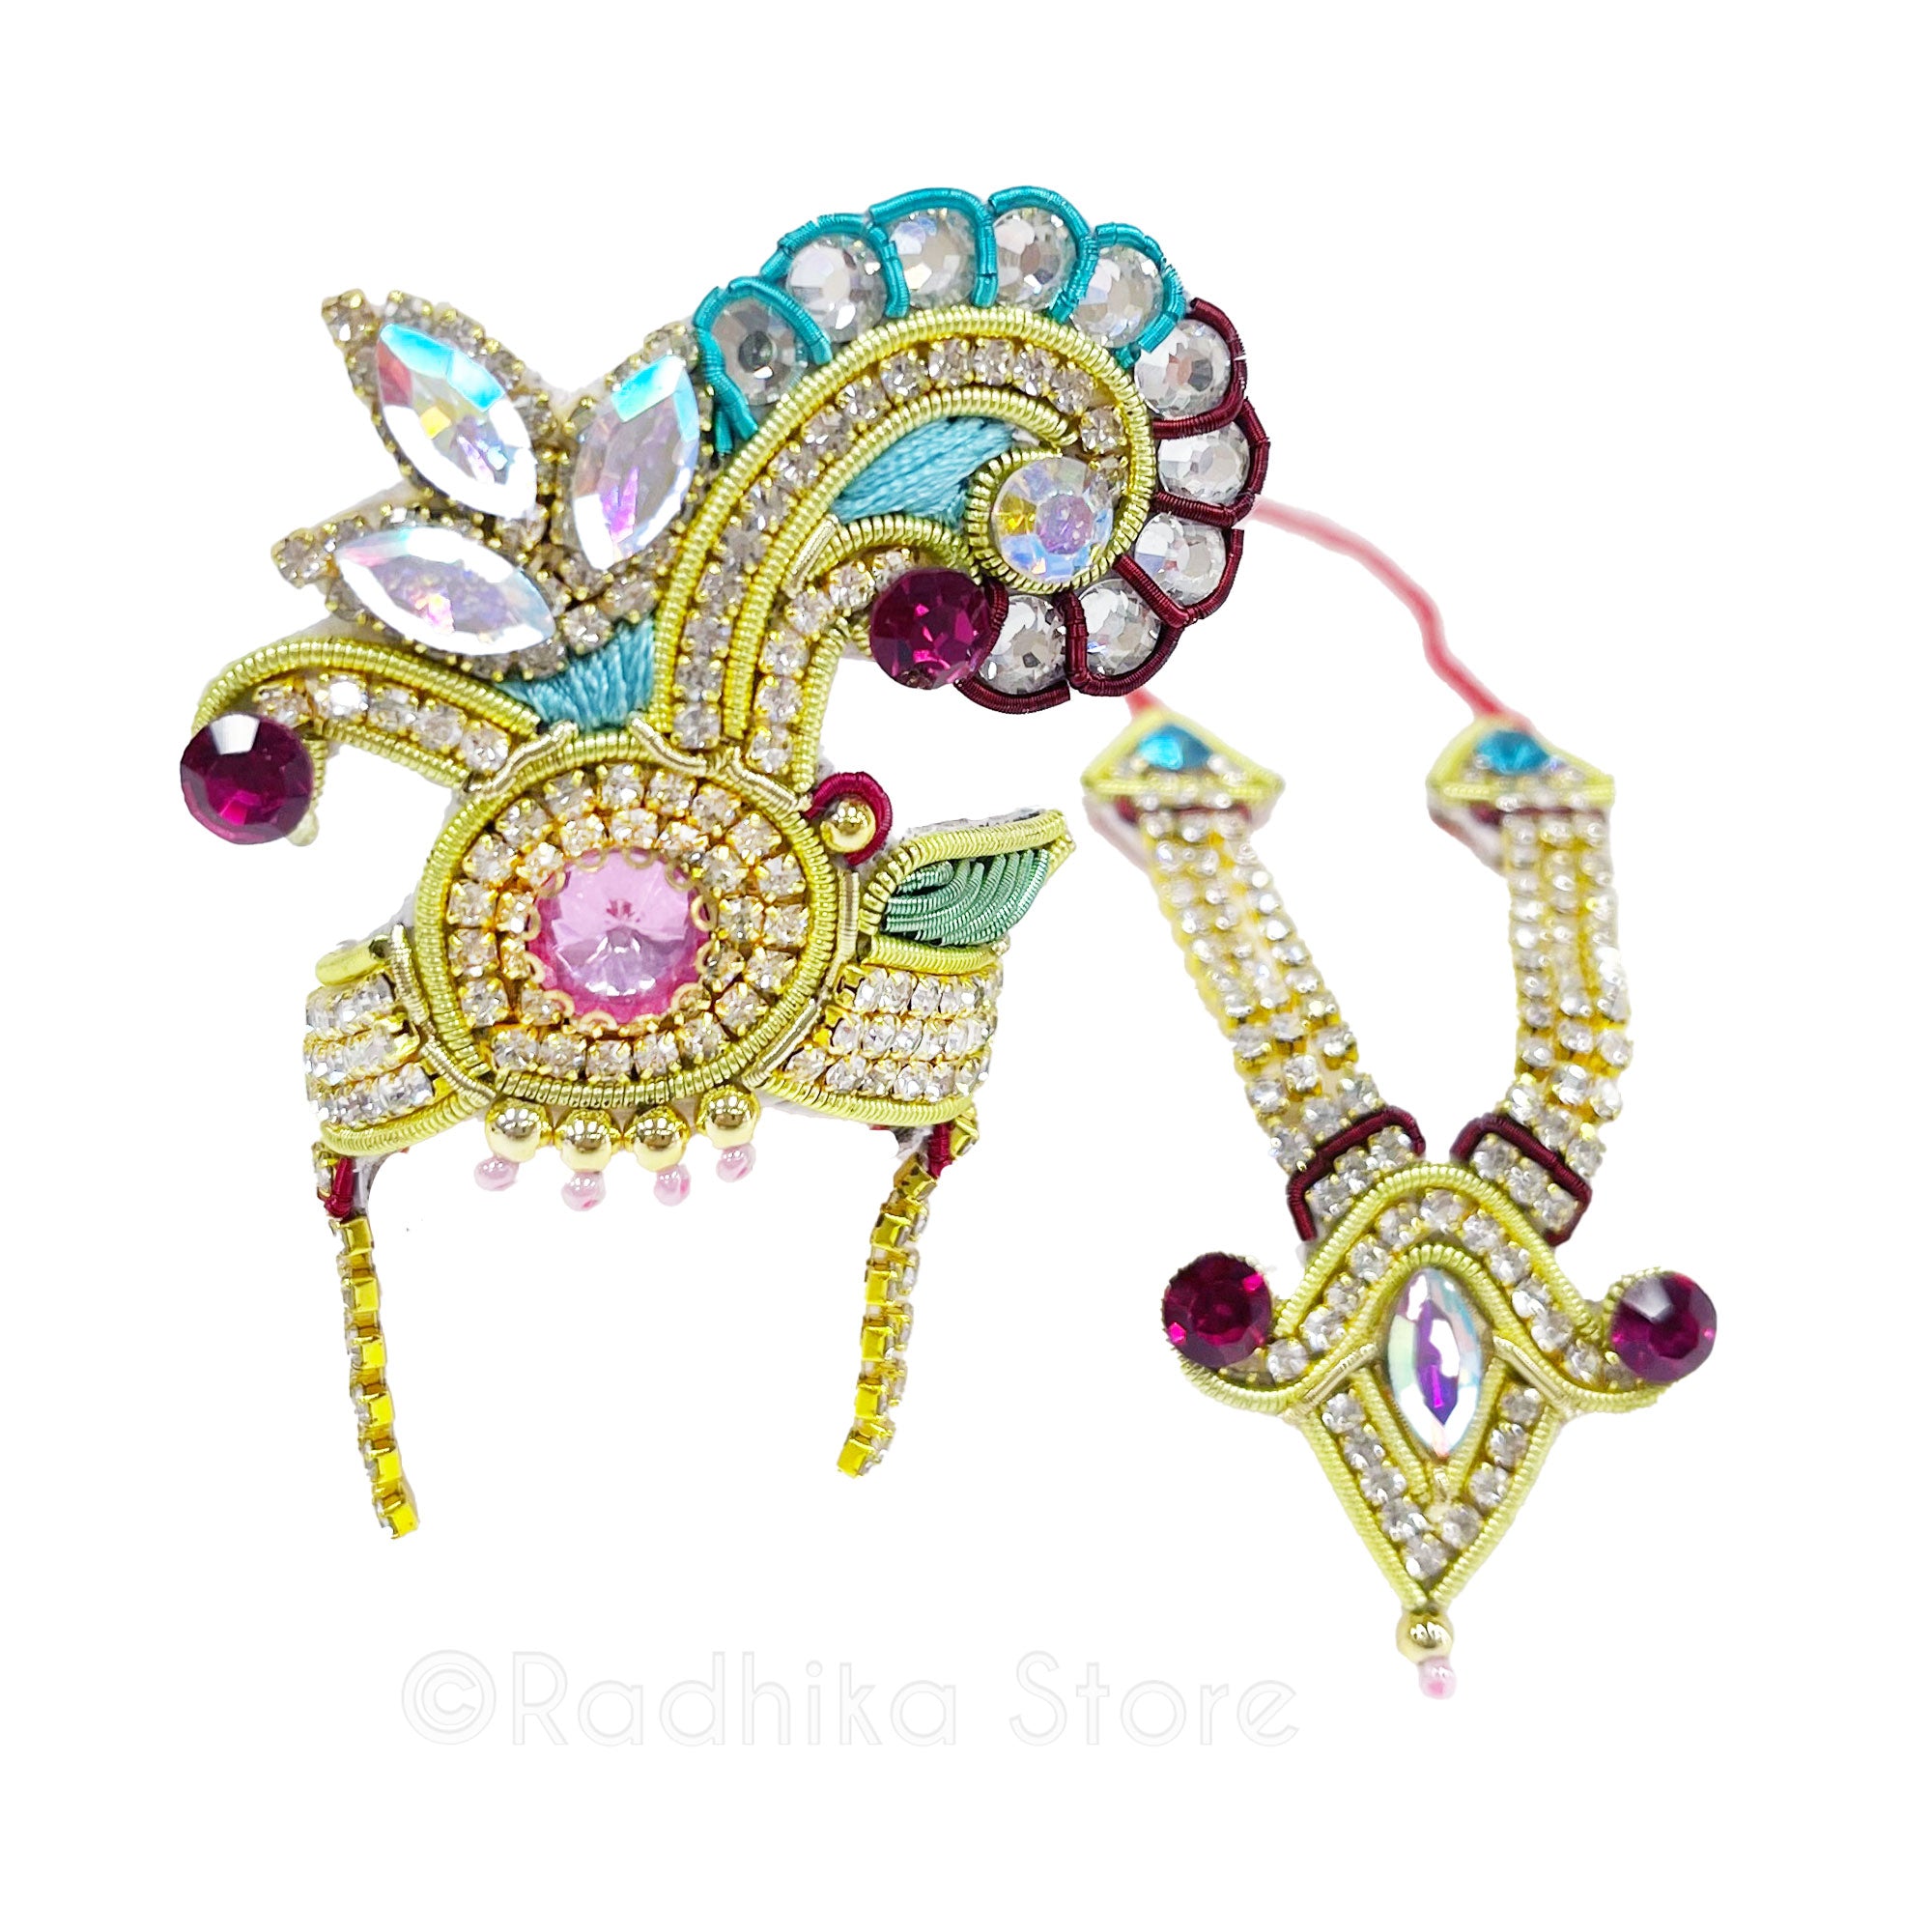 Vrindavan Sweetness - Deity Crown and Necklace Set